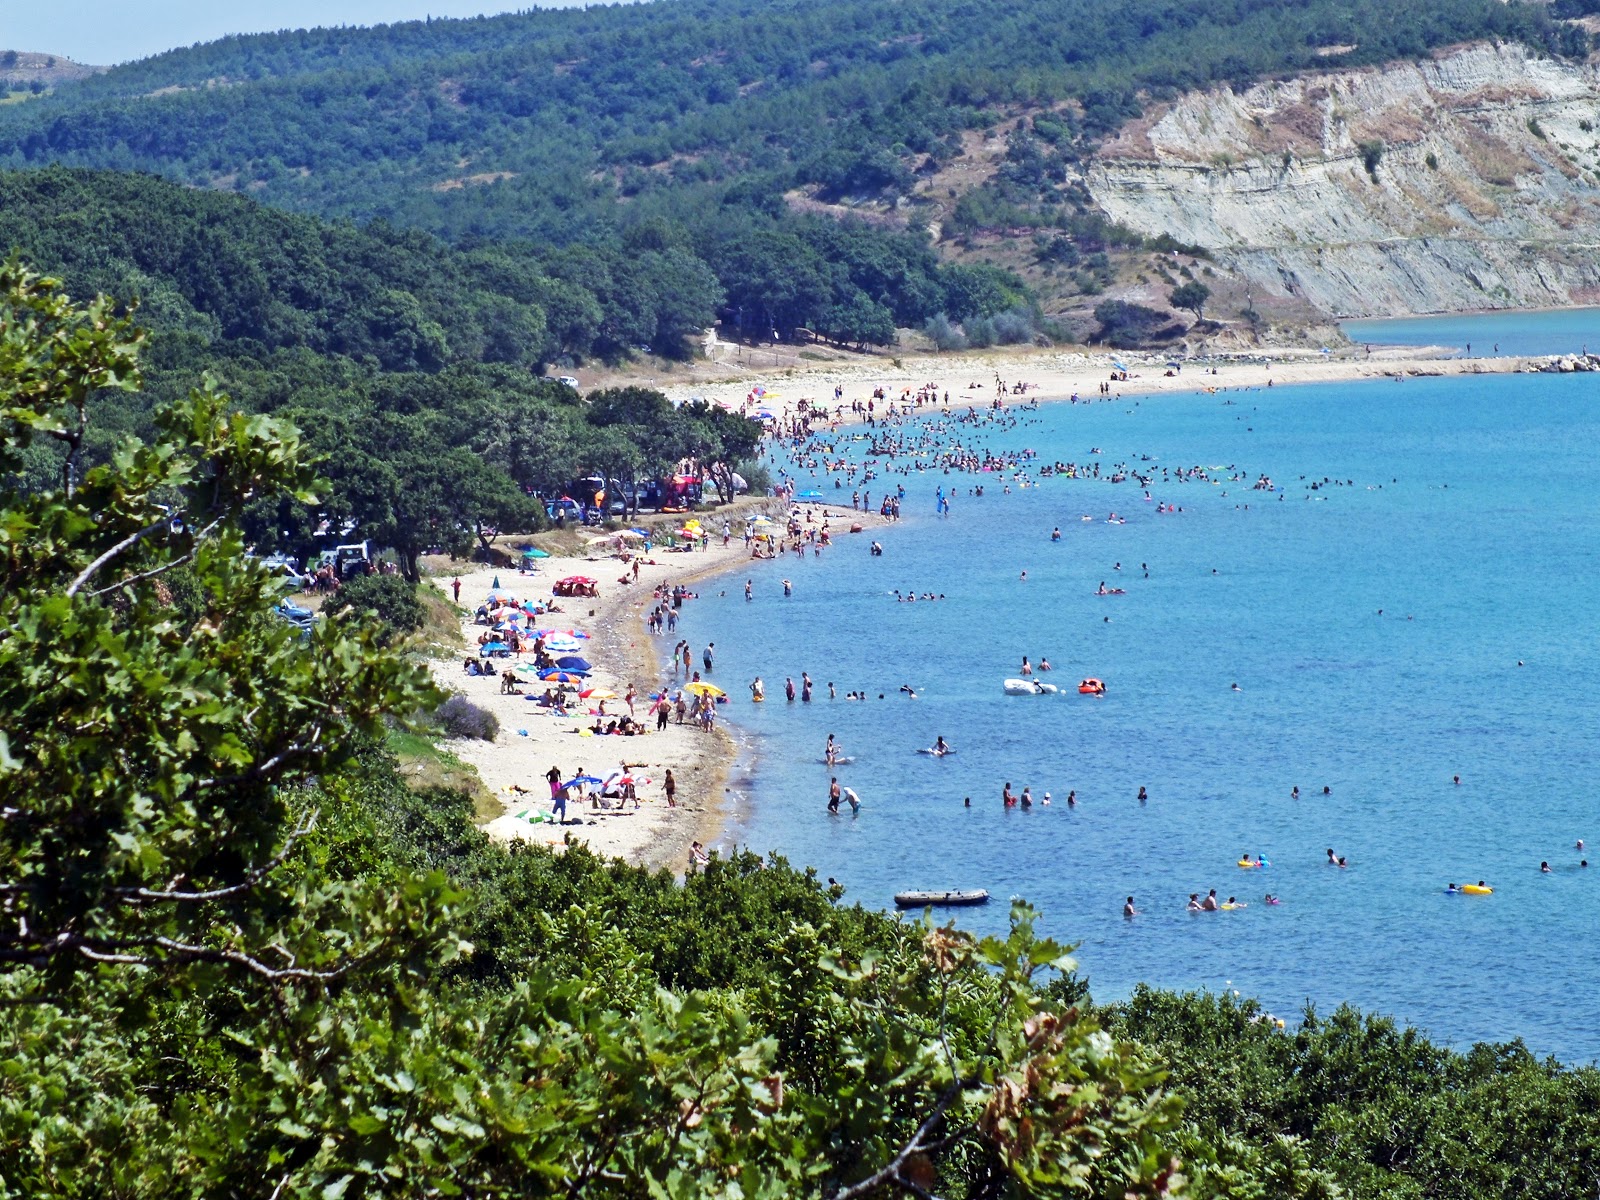 Photo de Erikli beach III situé dans une zone naturelle